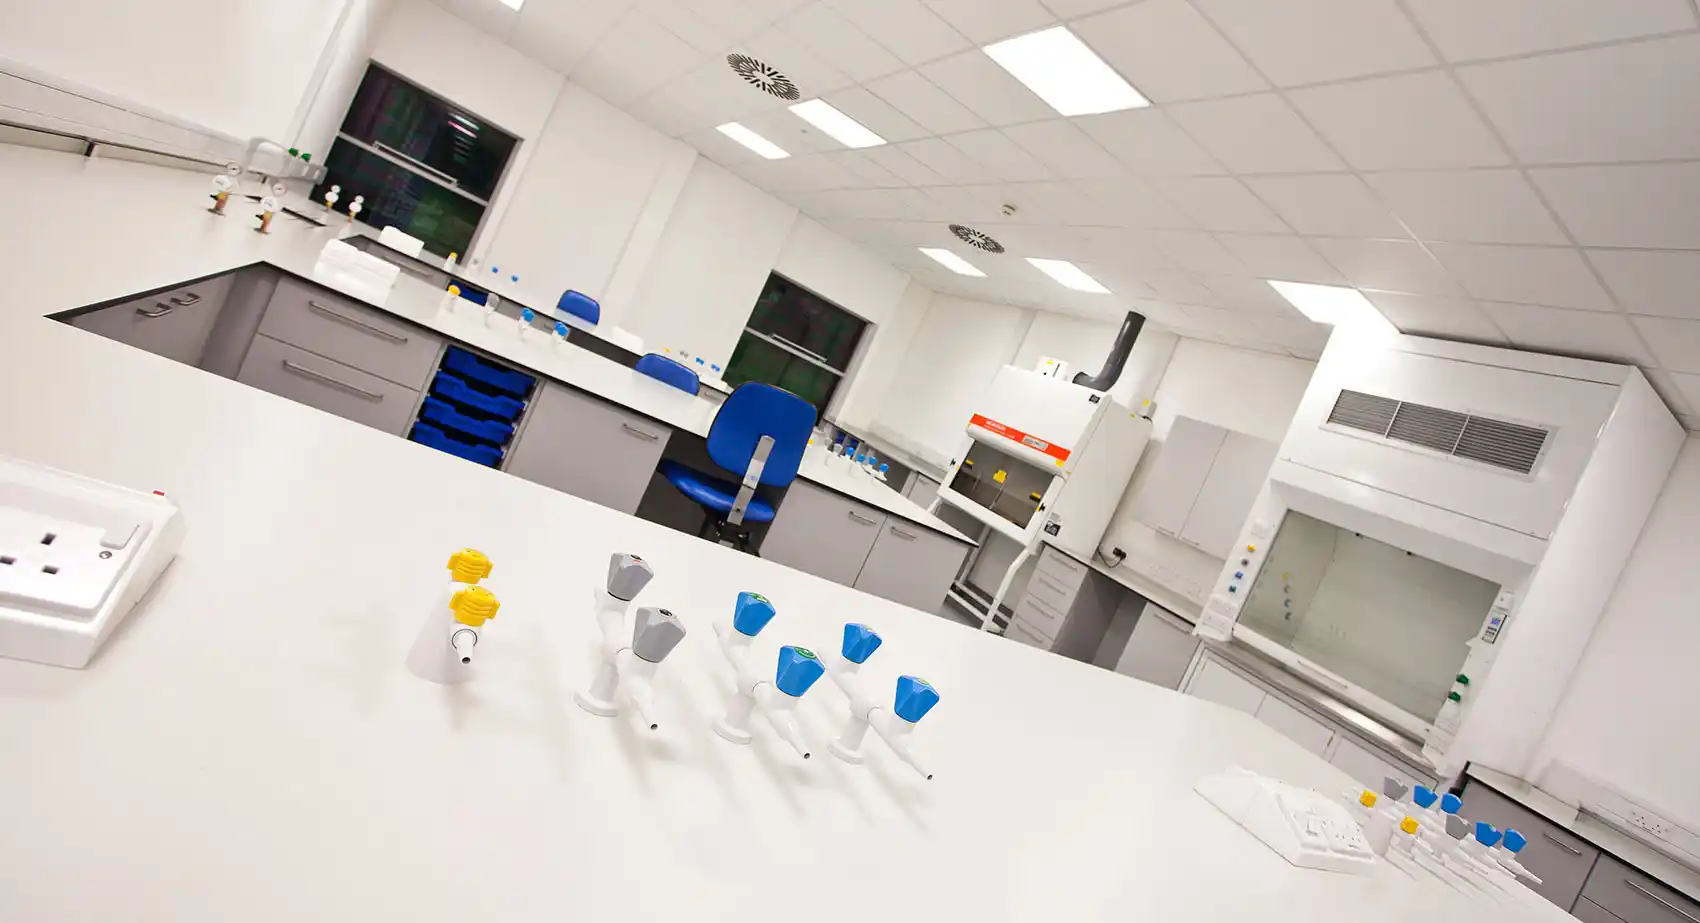 interfocus laboratory furniture installation showing lab refurbishment